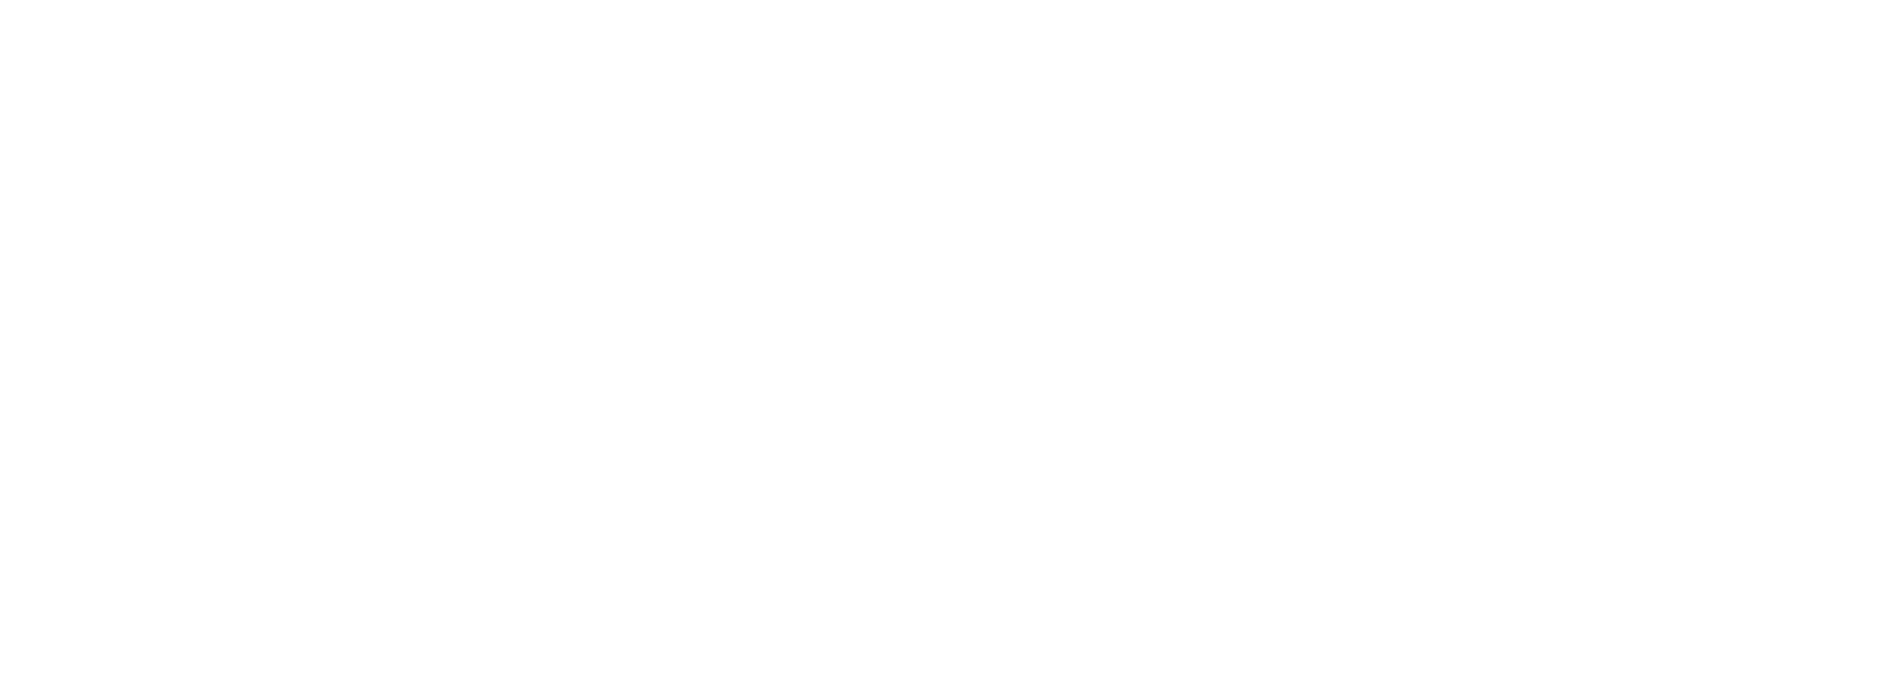 Roberts Logo - Mark Roberts Motion Control